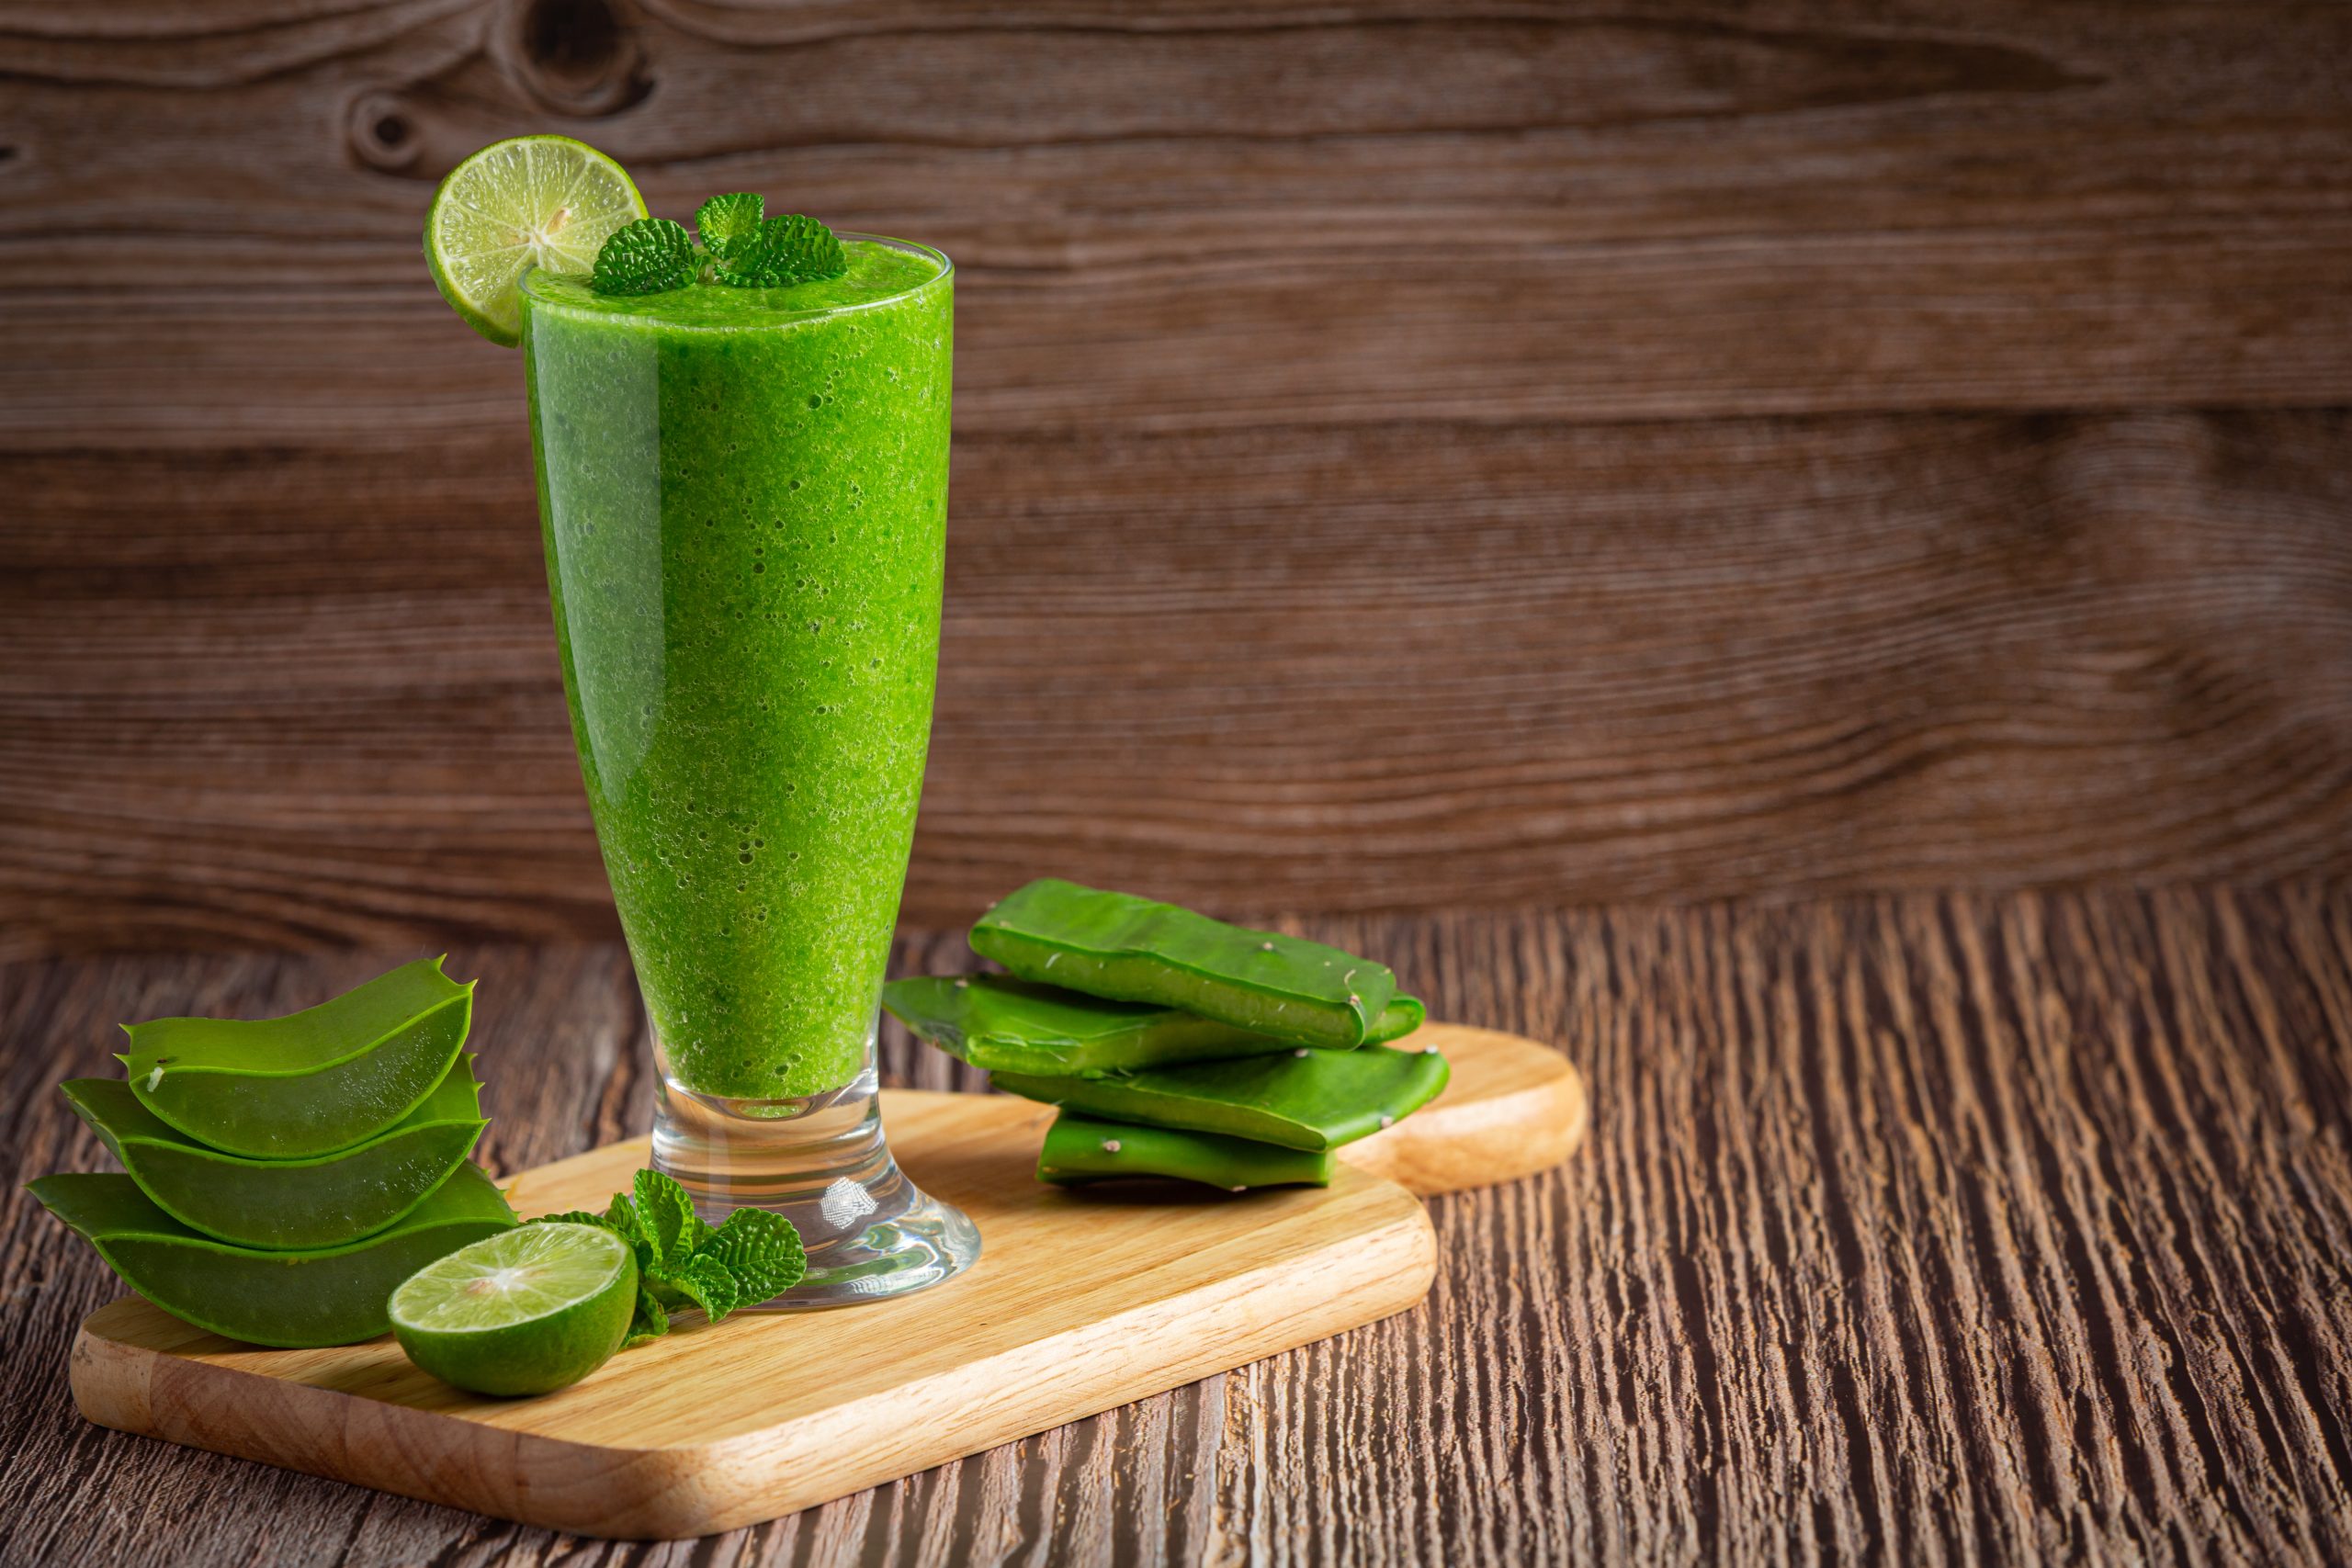 12 Resep Cara Mengolah Aloe Vera Menjadi Makanan dan Minuman yang Enak dan Mudah Dibuat!